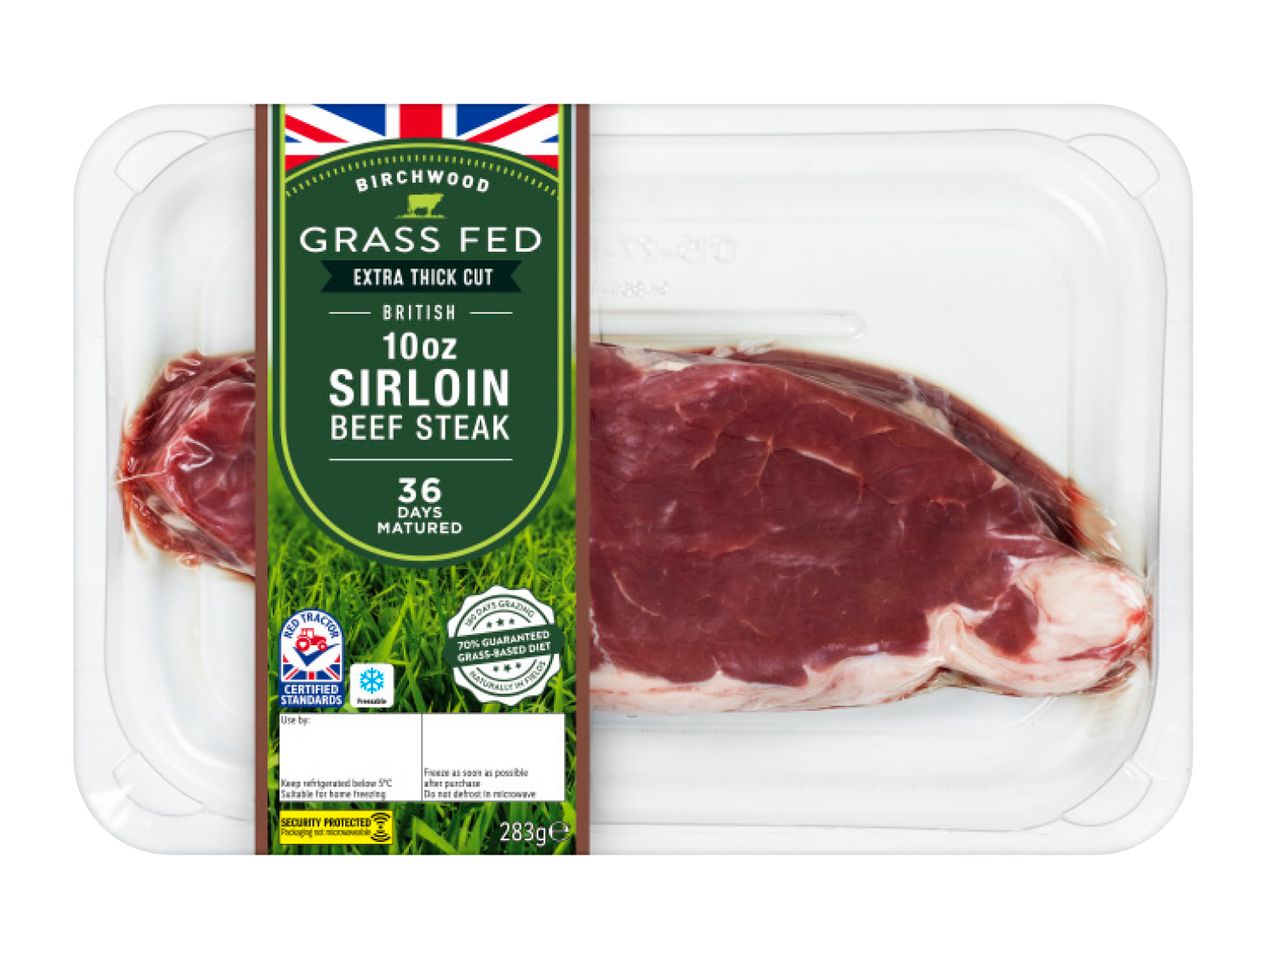 Go to full screen view: Birchwood Grass Fed 10oz British Beef 36-Day Matured Sirloin Steak - Image 1